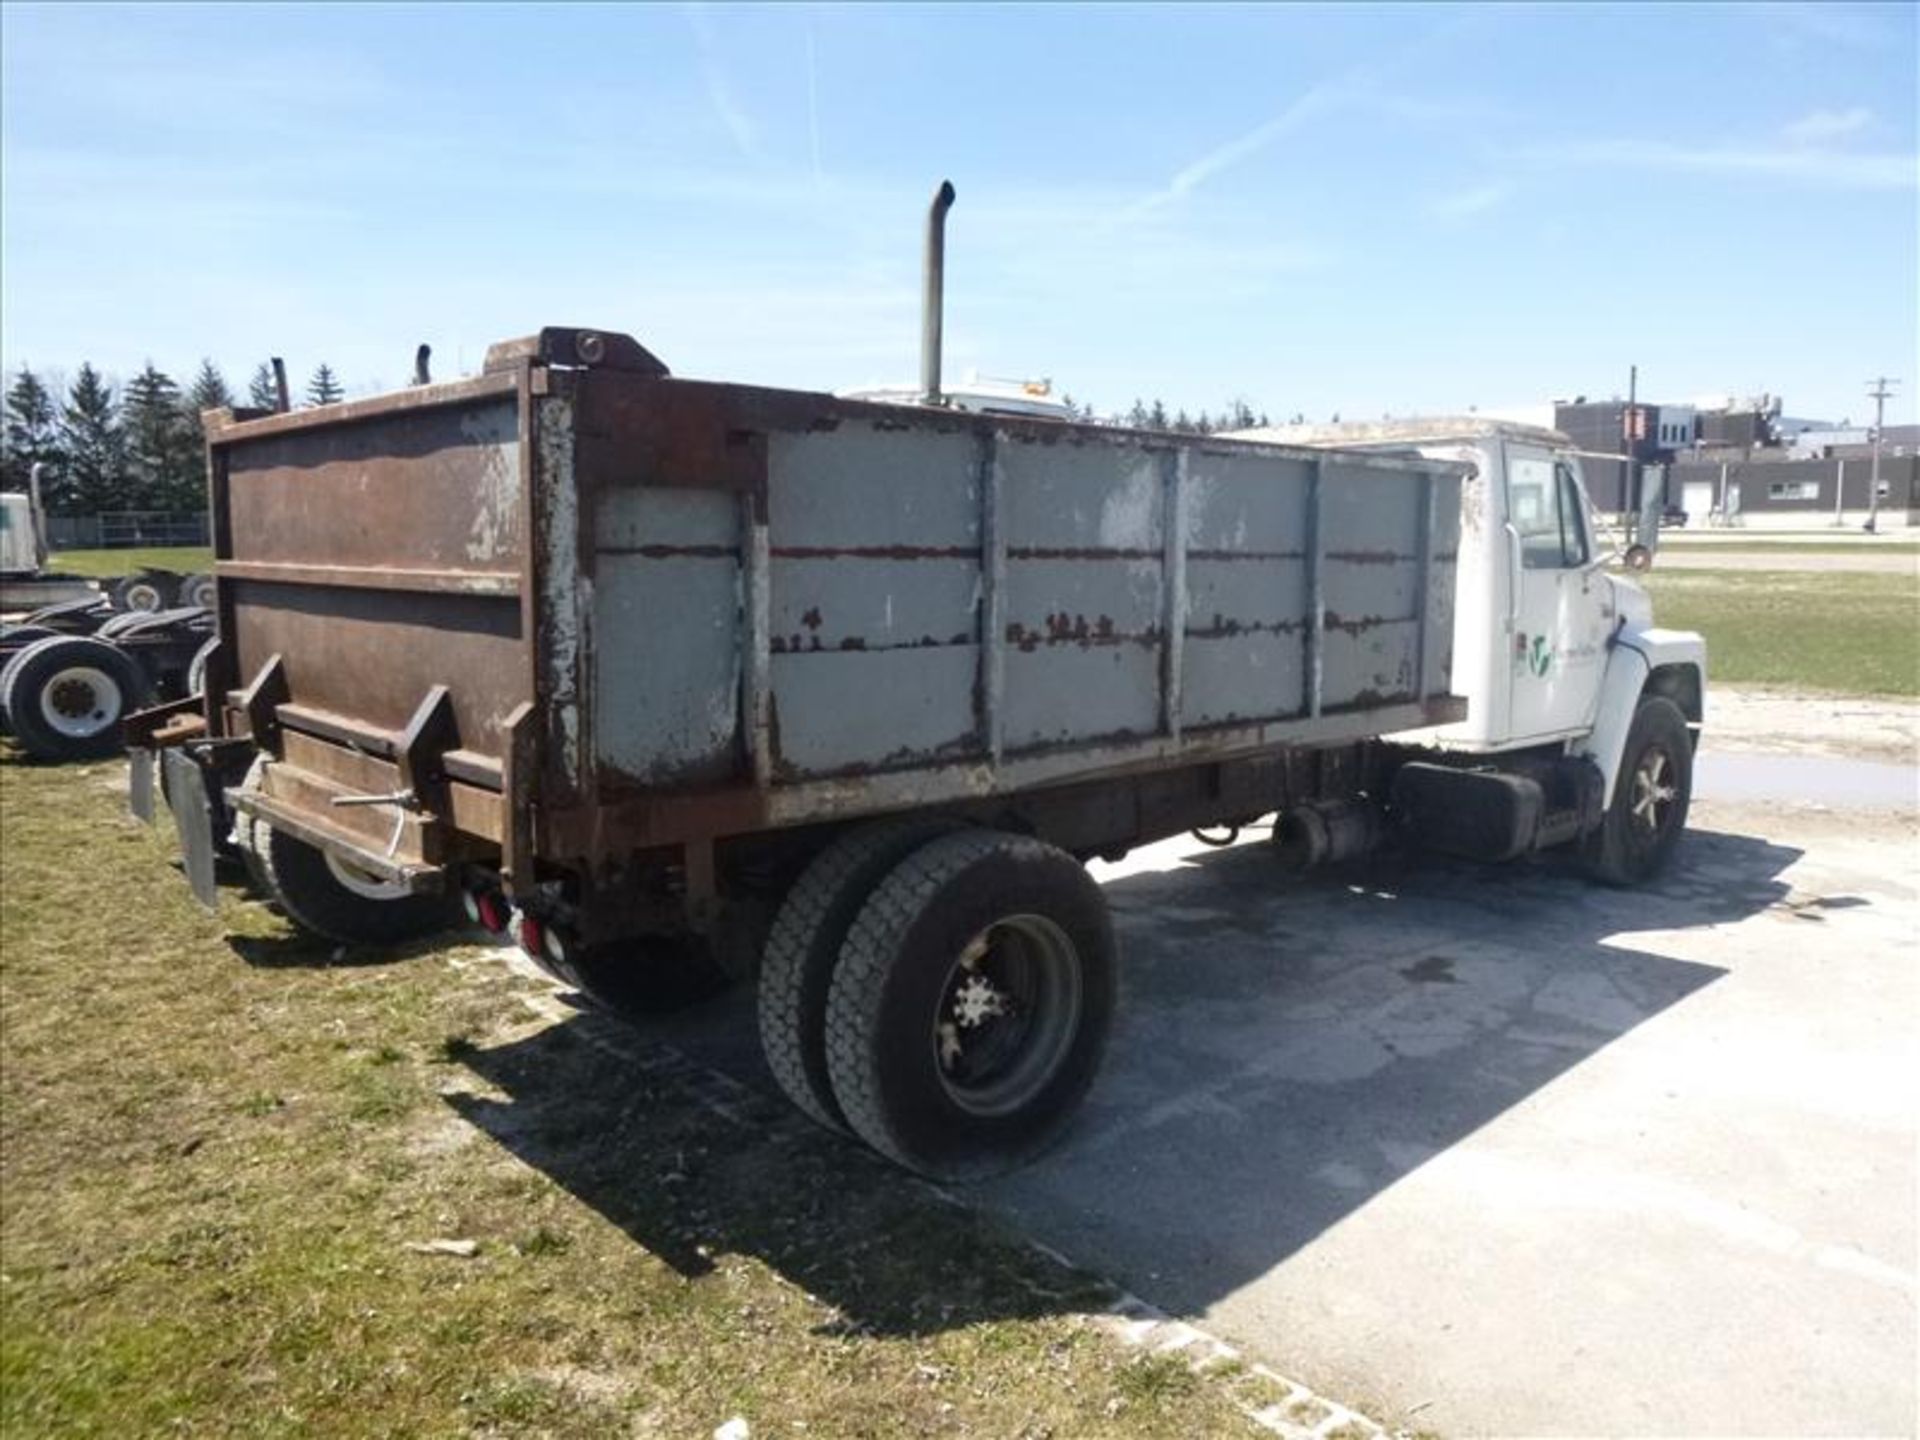 1987 International S1600 single axle diesel dump truck, model 1654, v.i.n. 1HTLAHGM5HH483891 - Image 2 of 6